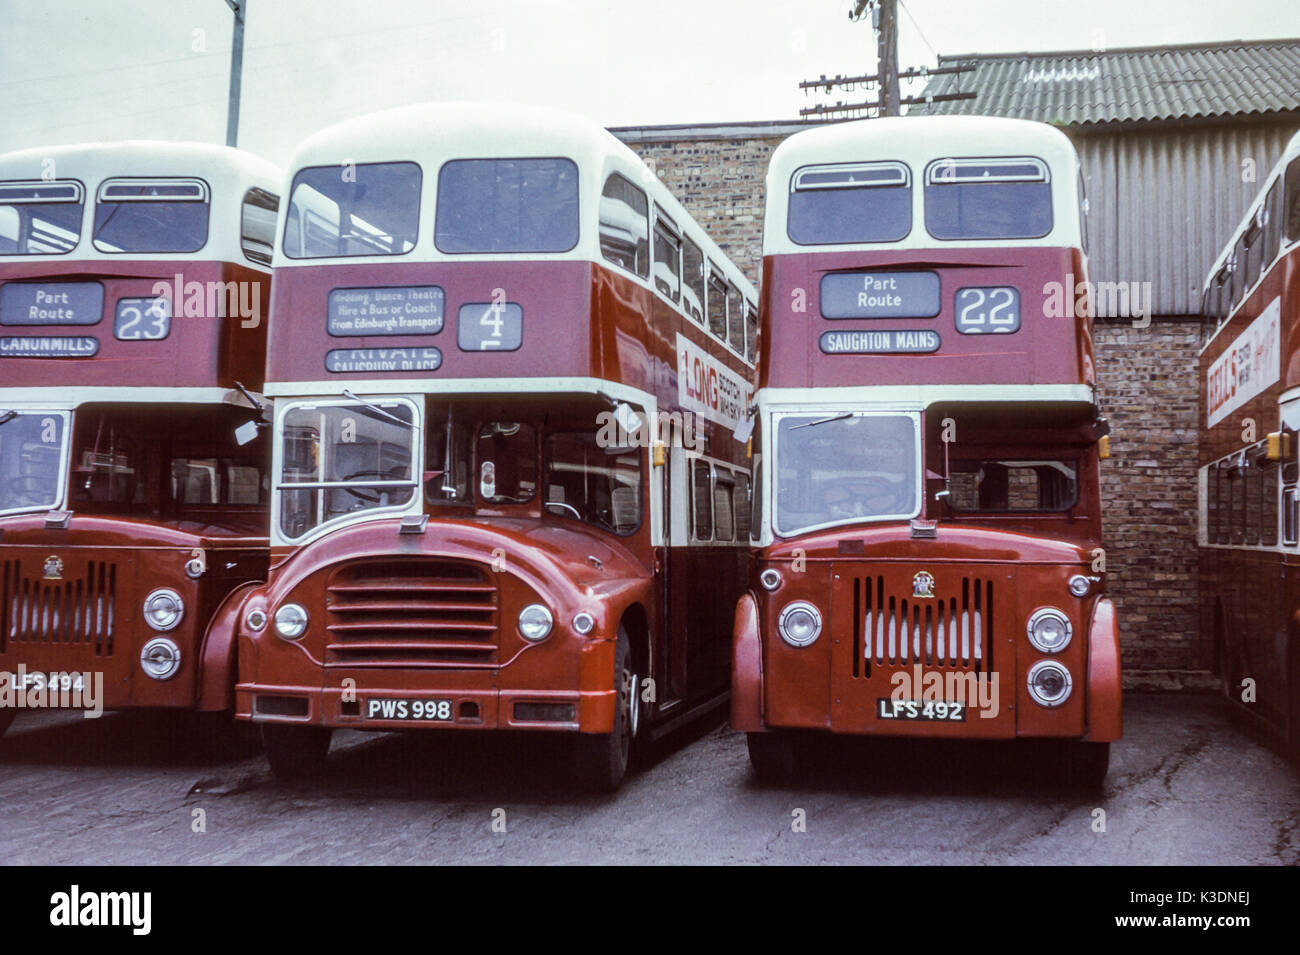 Escocia, Reino Unido - 1973: Vintage imagen de autobuses operan en 1973. Edimburgo Leyland PD flota2/20 no.494 (registro EPA EPA 492 y 494) y Leyland PD3/2 998 PWS regisration flota (998). Foto de stock